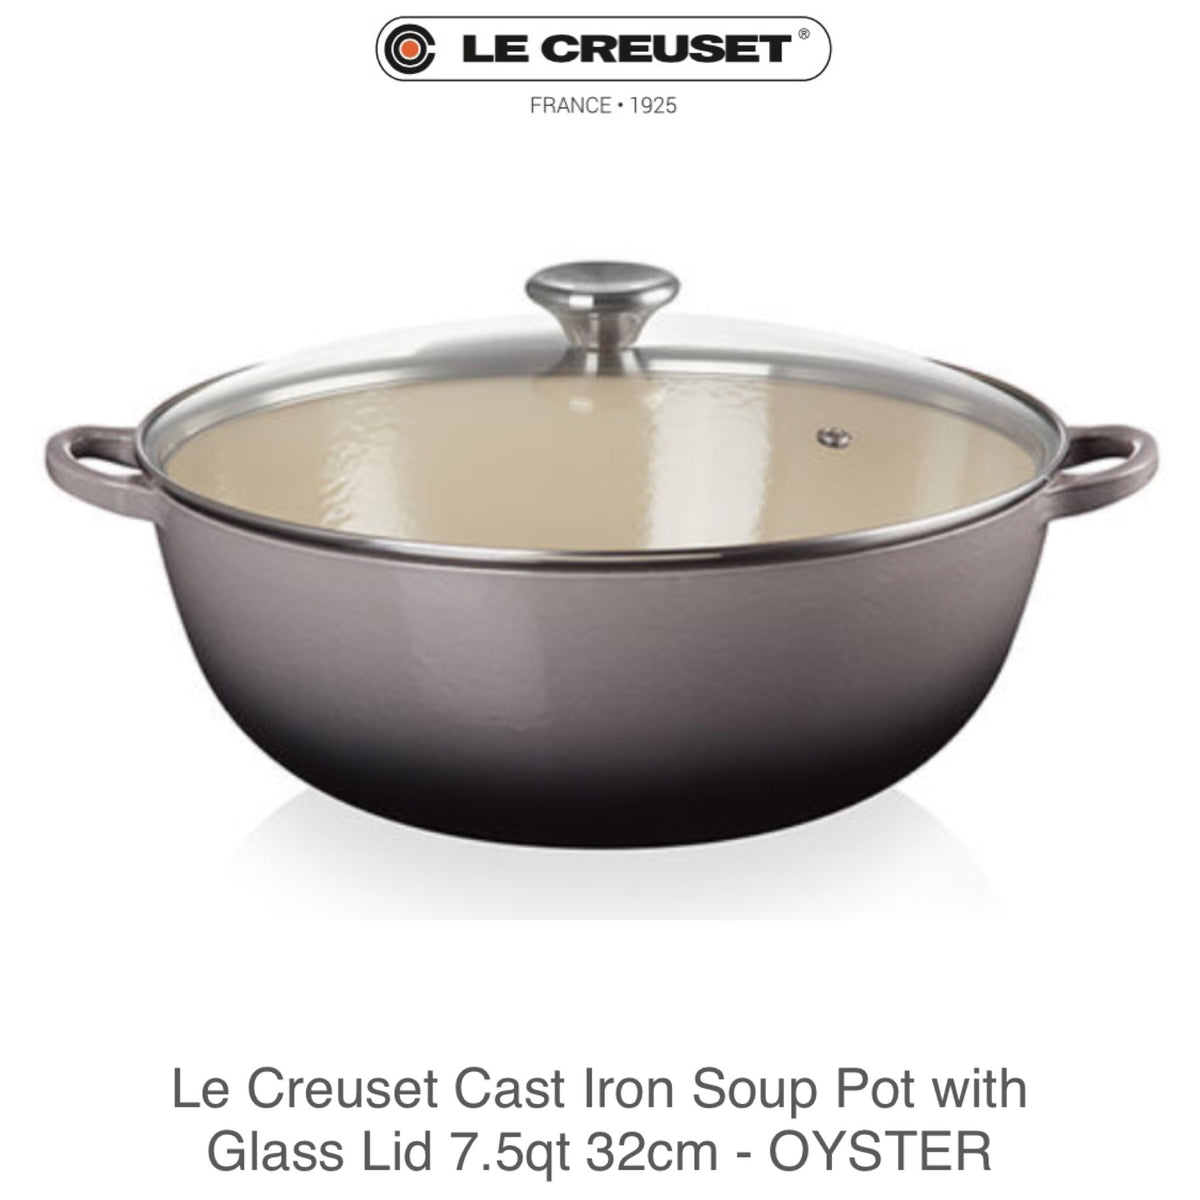 Le Creuset Enameled Cast Iron Wok with Glass Lid 4.75qt - MARSEILLE –  LittleLuxeOfLife